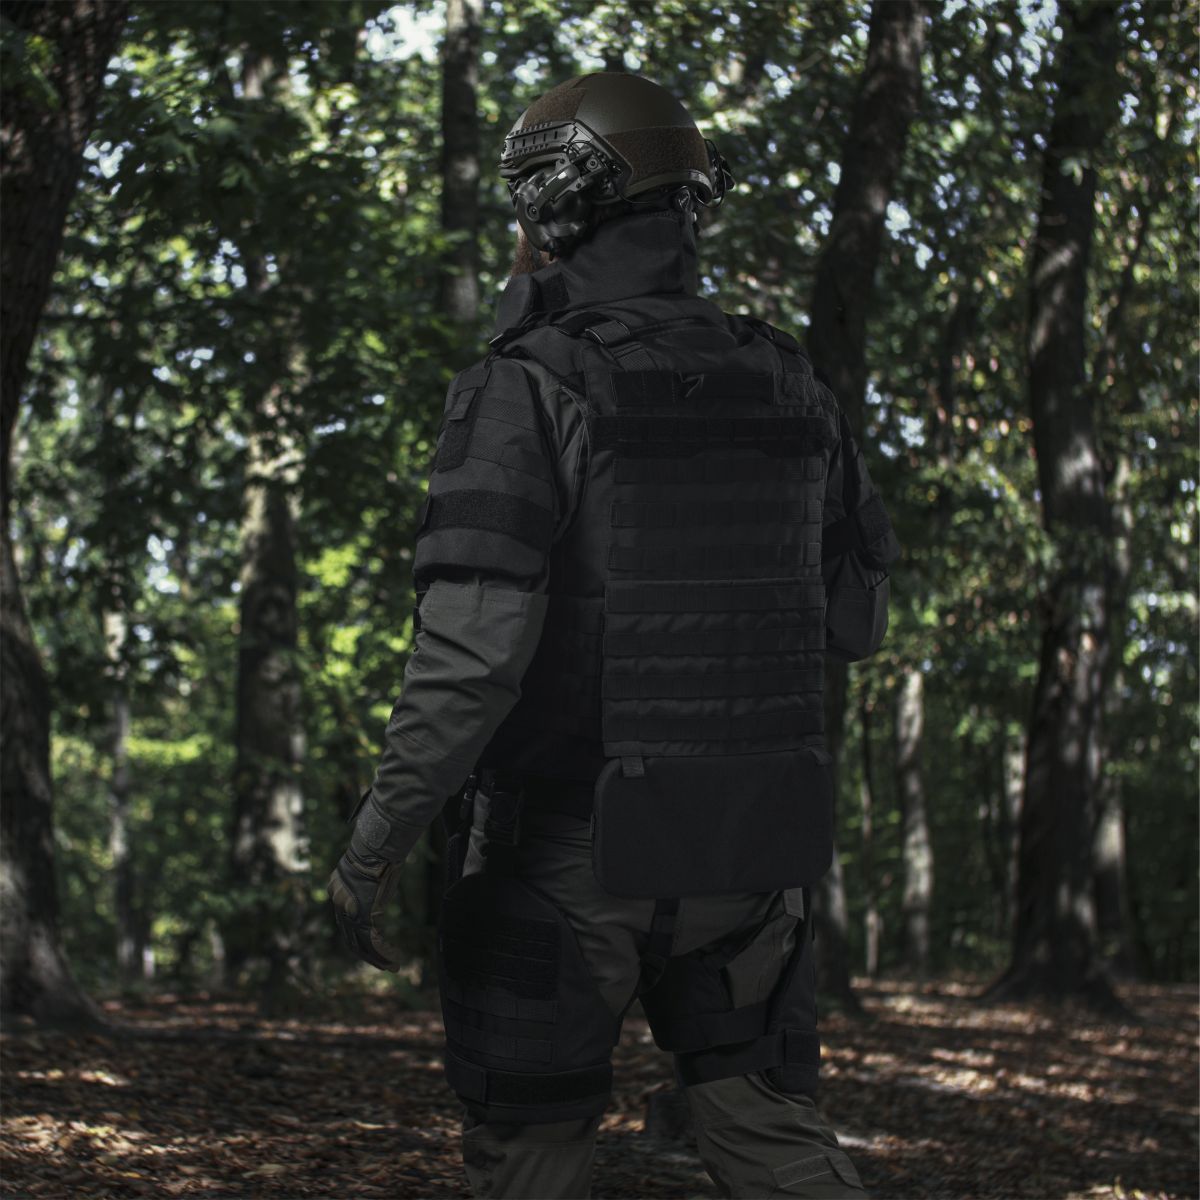 Бронекостюм A.T.A.S. (Advanced Tactical Armor Suit) Level II. Клас захисту – 2. Чорний. L/XL 6